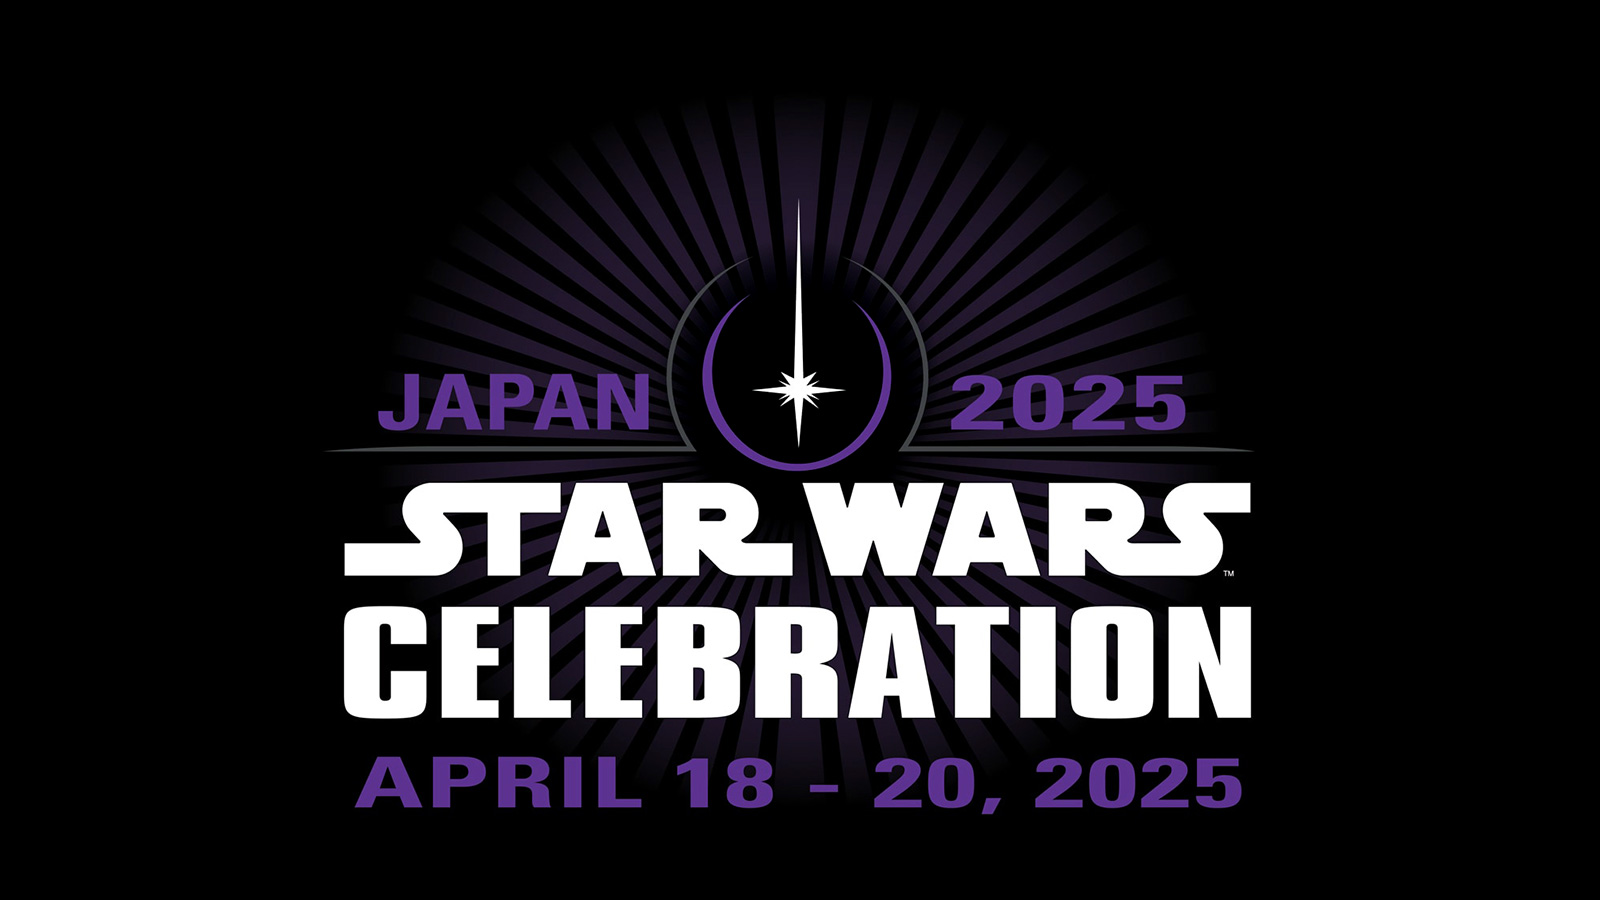 Star Wars Celebration 2025 Will Be In Japan